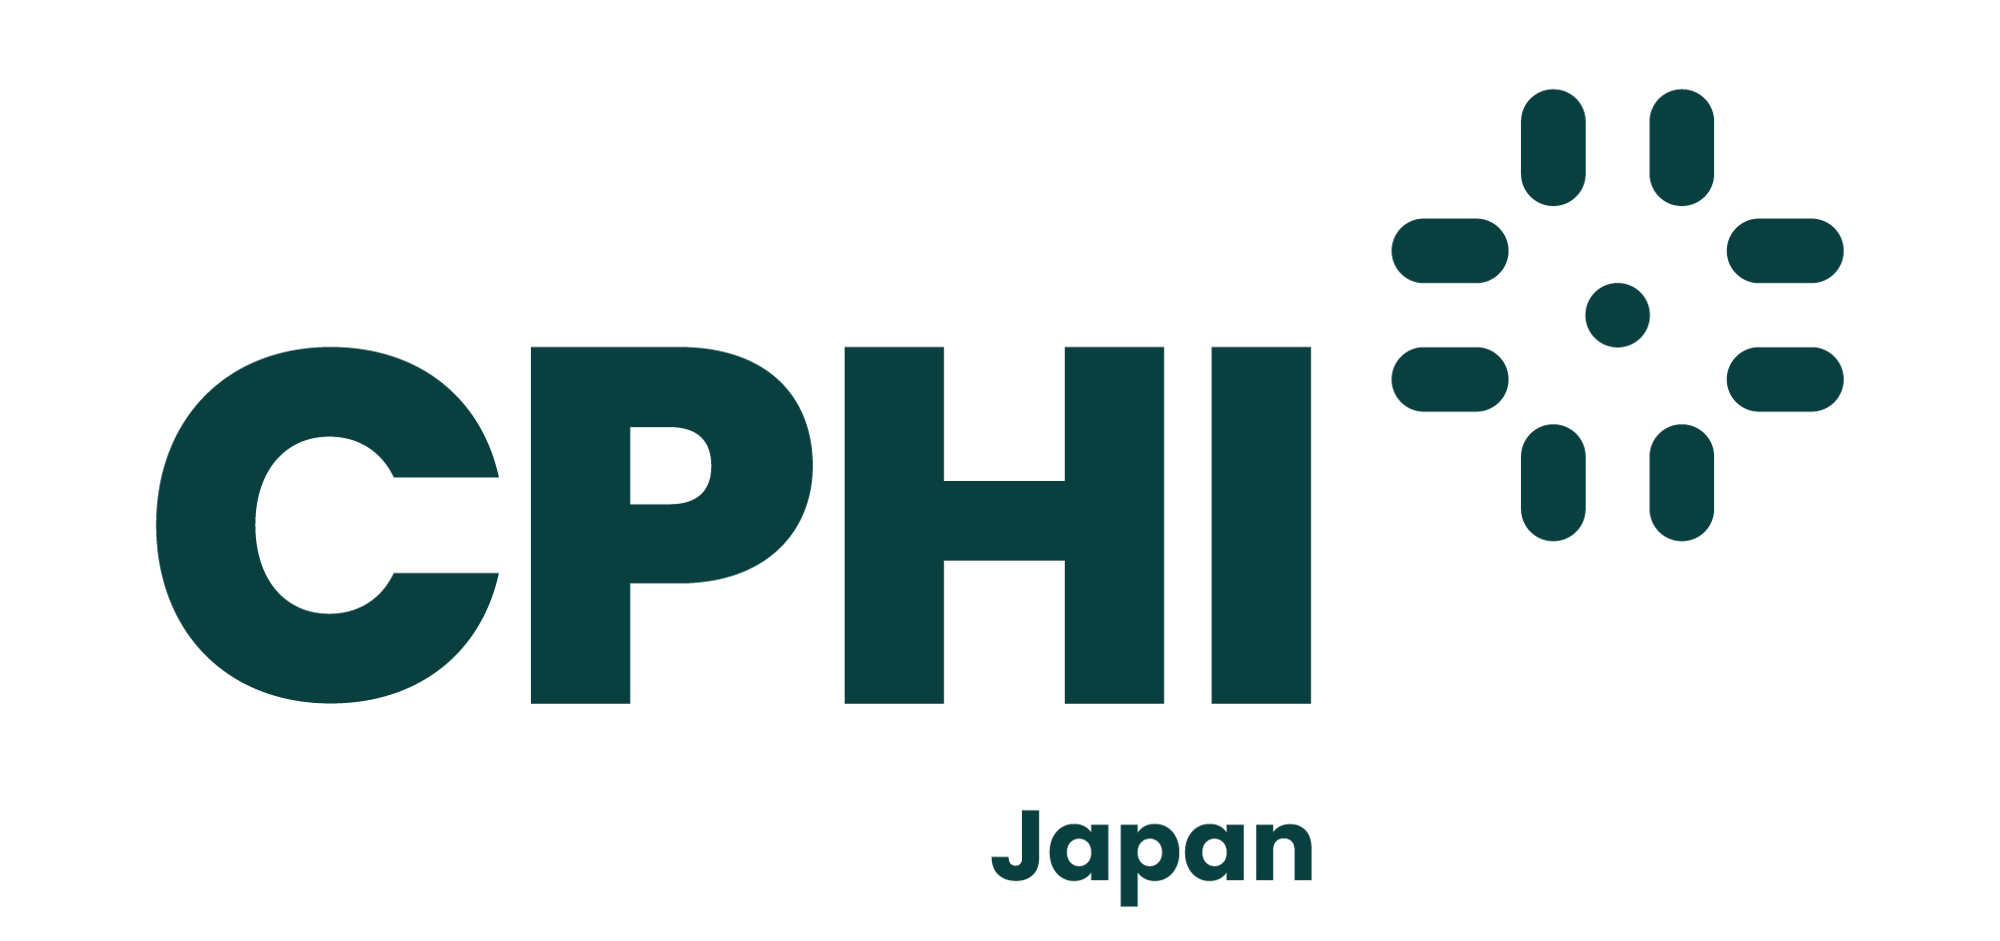 CPHI_LOGO_JAPAN_B-DARKGREEN-1